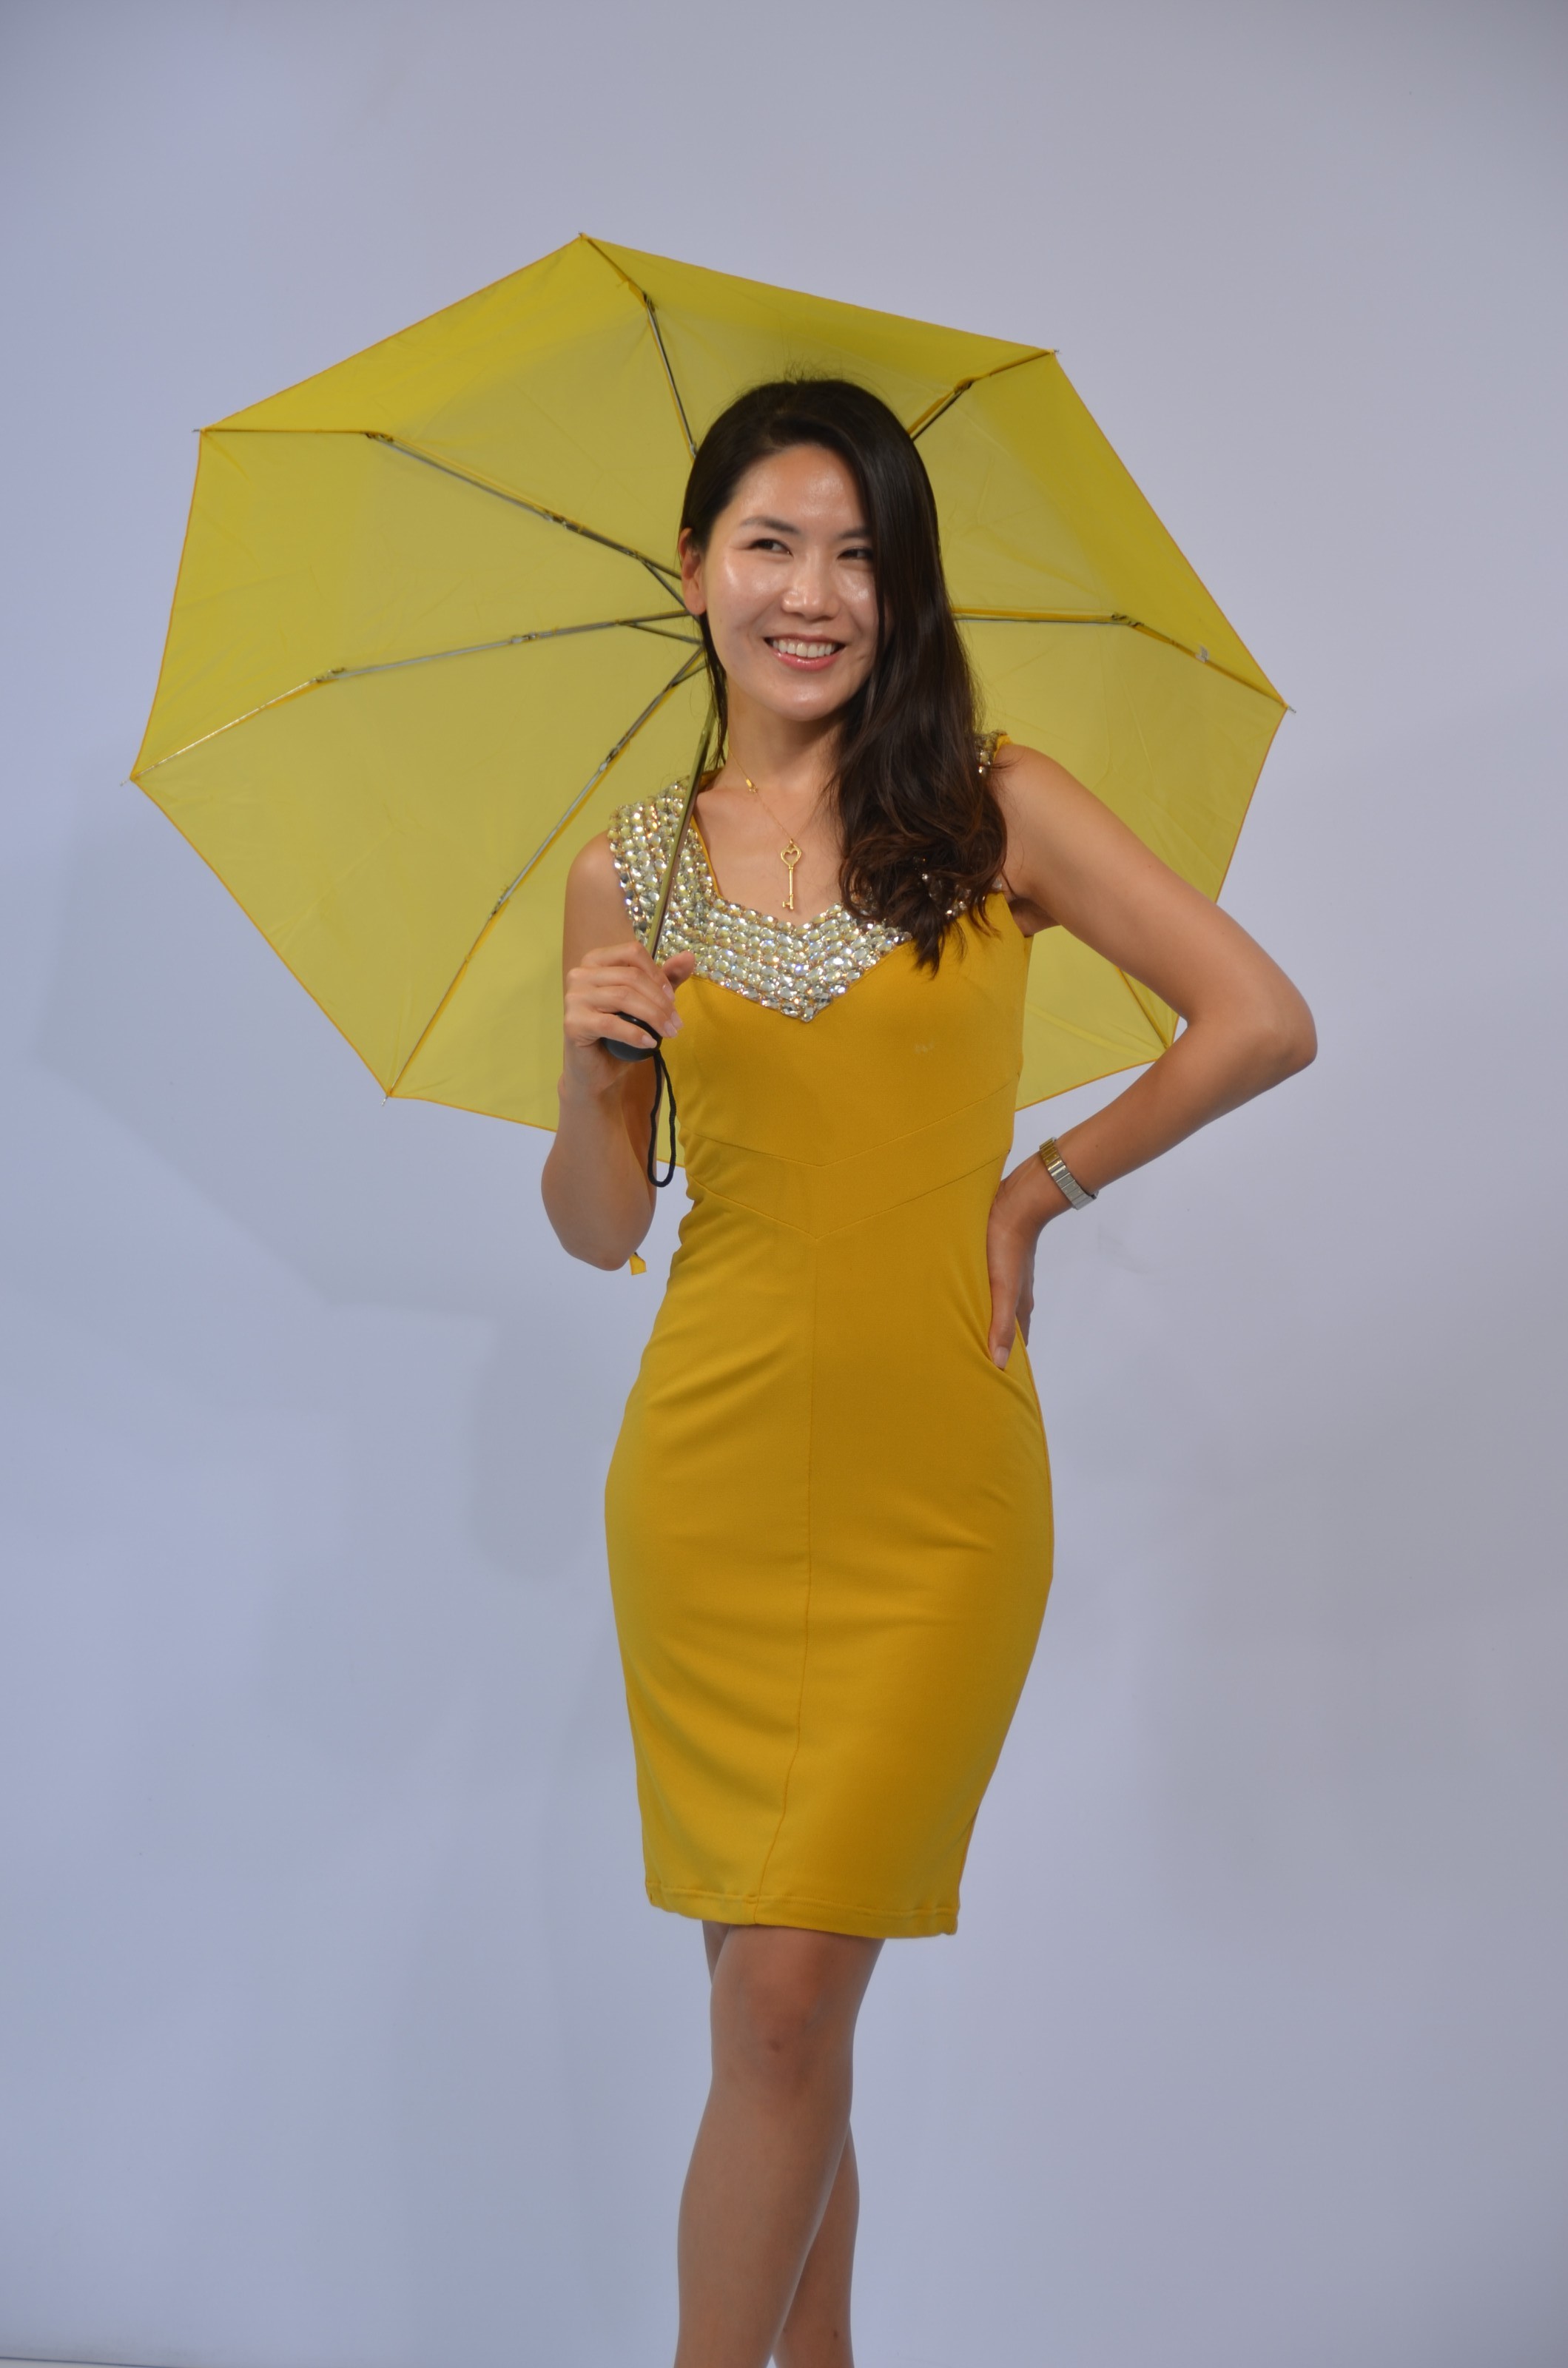 pretty girl in yellow dress and umbrella